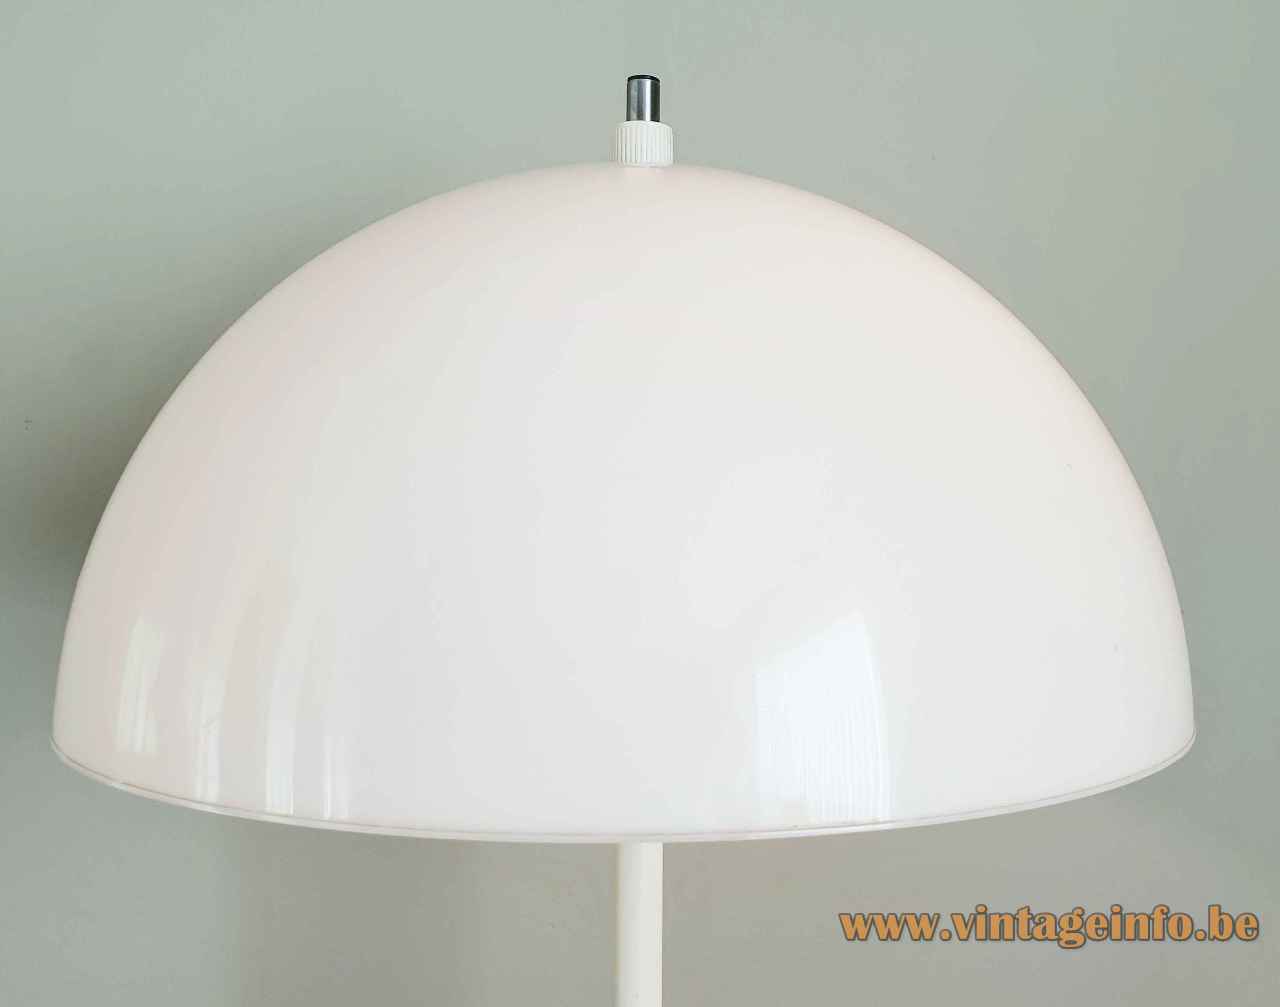 Hala mushroom table lamp round white acrylic half round lampshade 1960s 1970s 2 E14 sockets Netherlands 